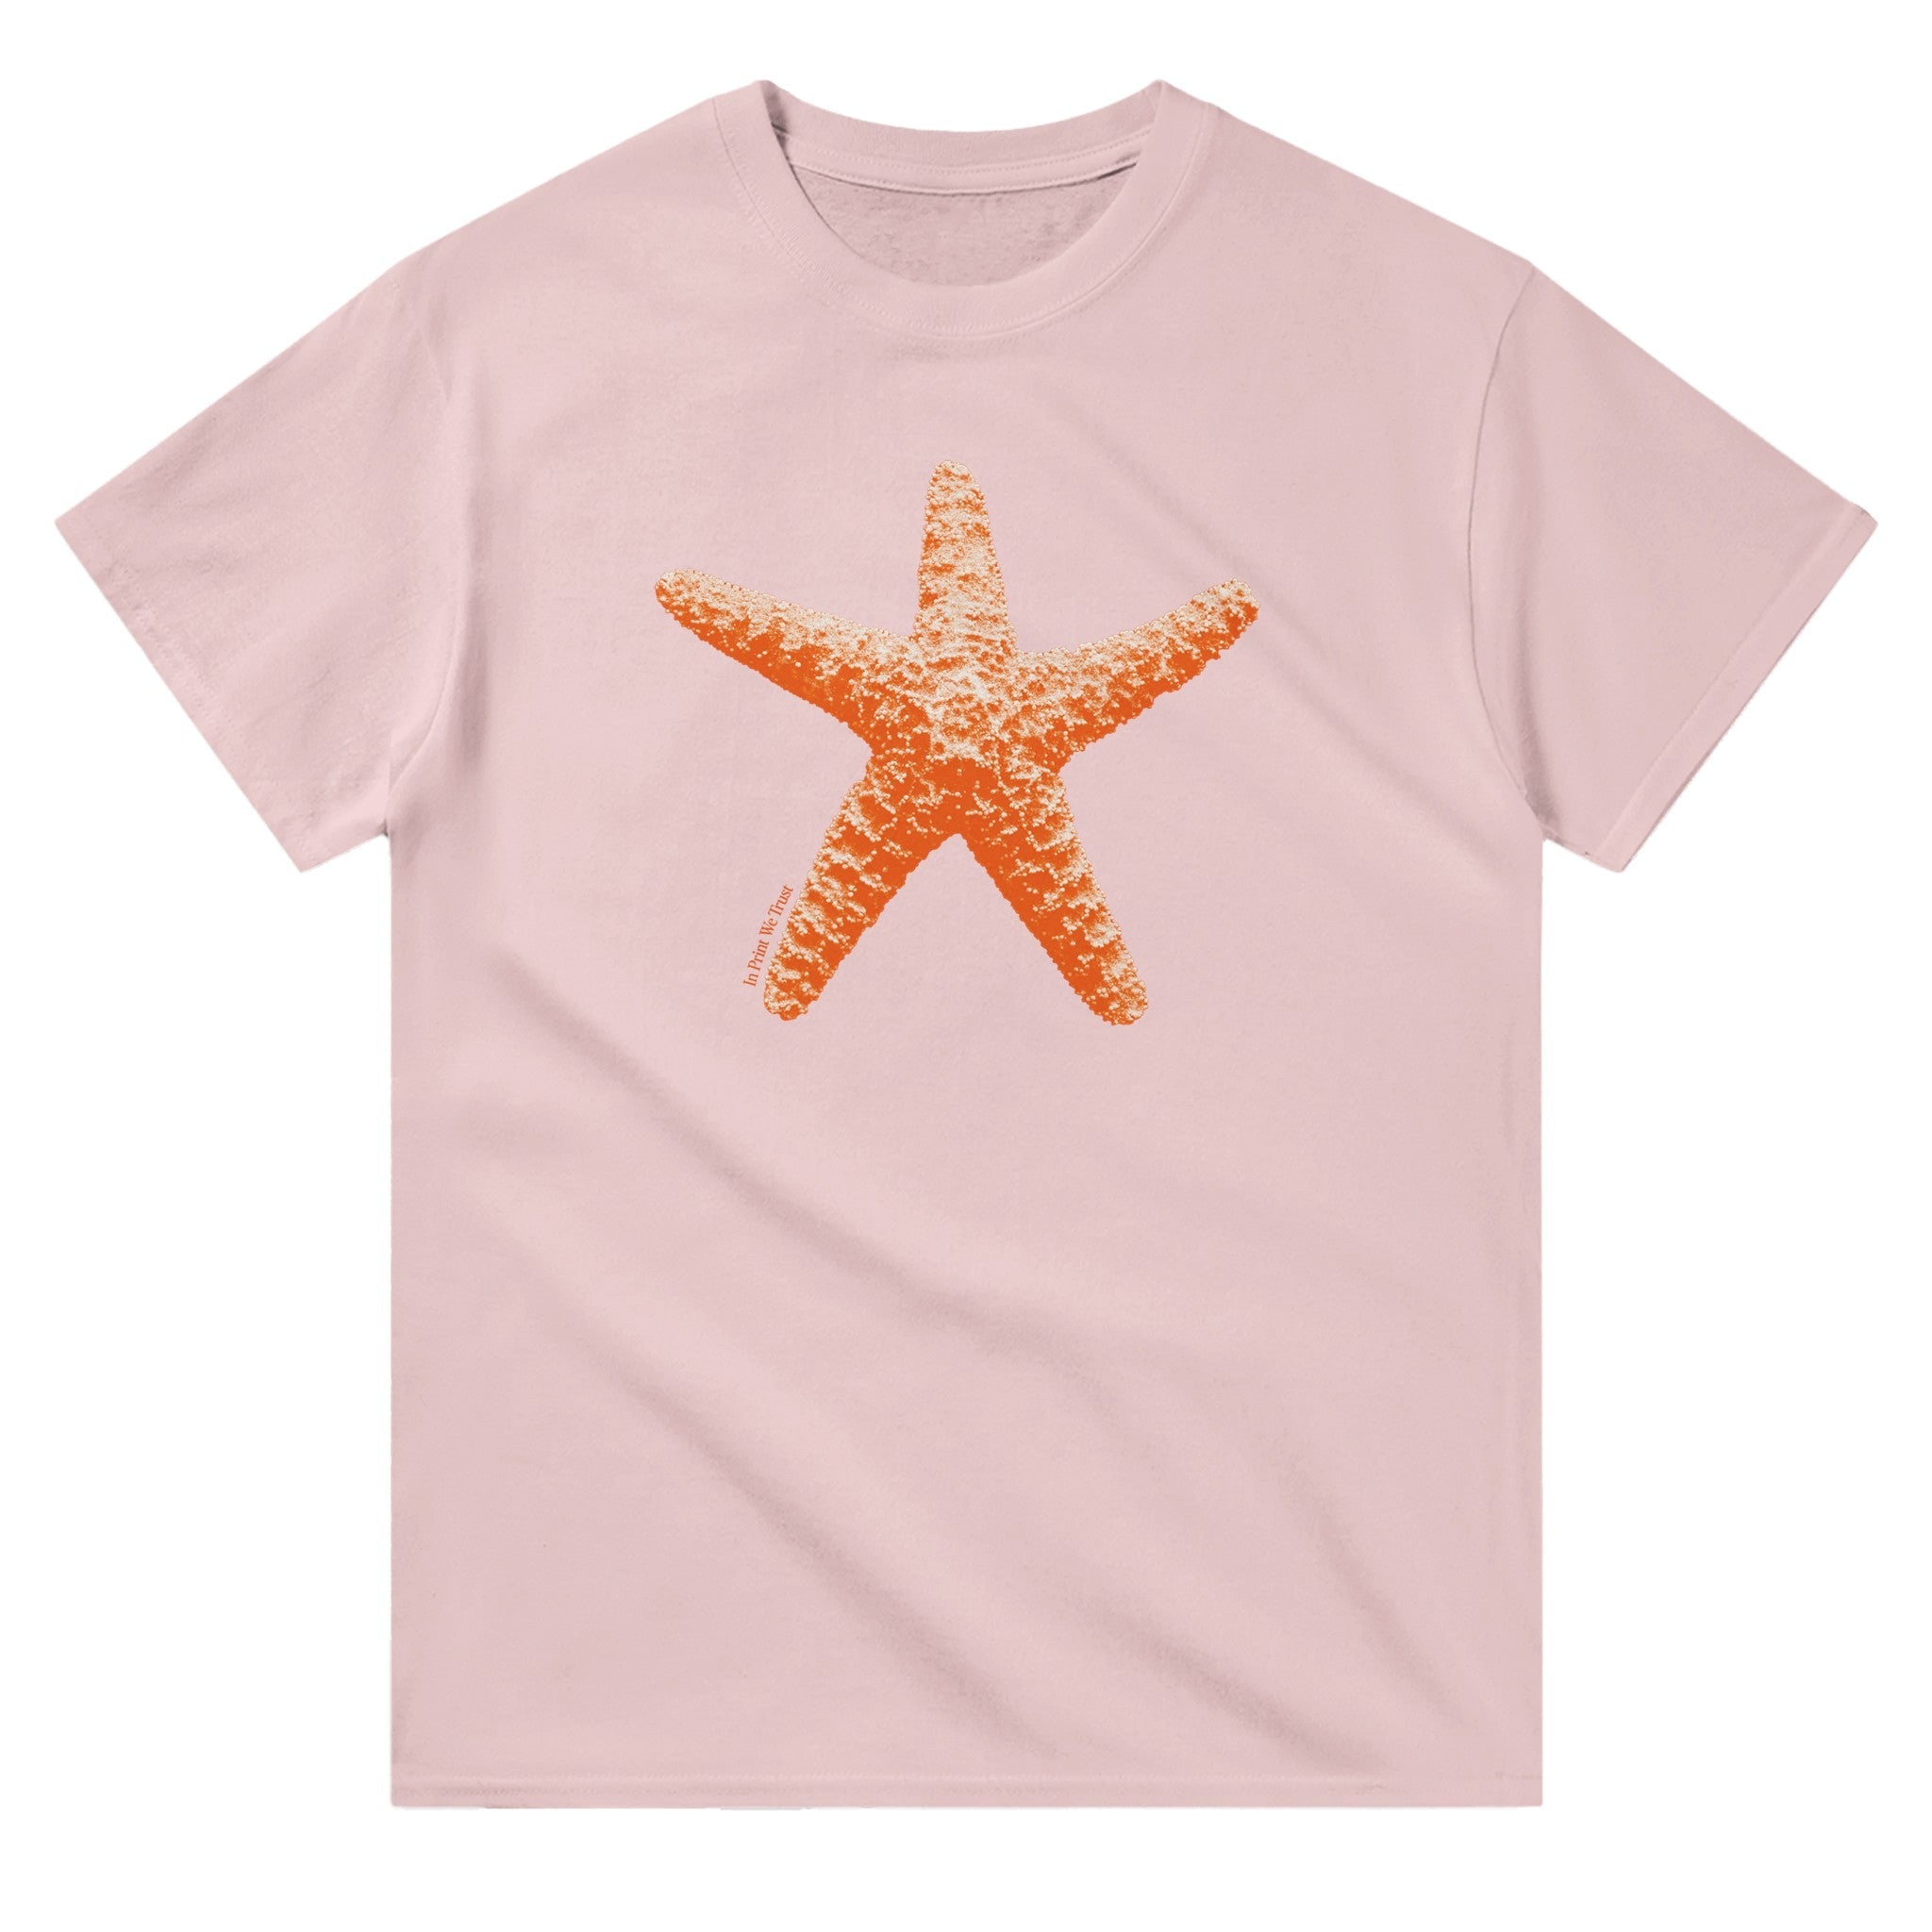 'Starfish' classic tee - In Print We Trust